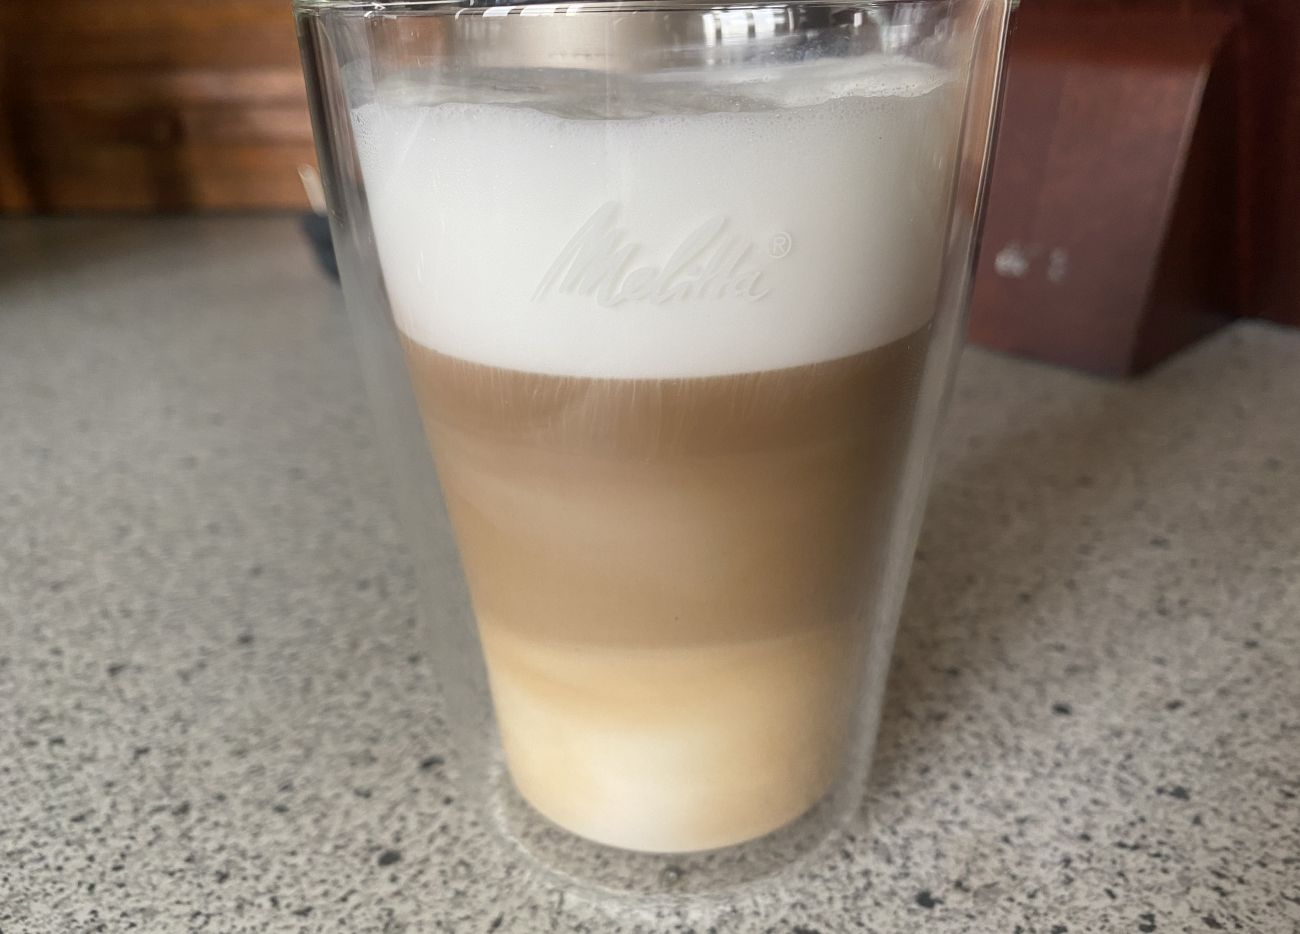 Melitta LatteSelect F63/0-201 zaparzone latte macchiato w szklance